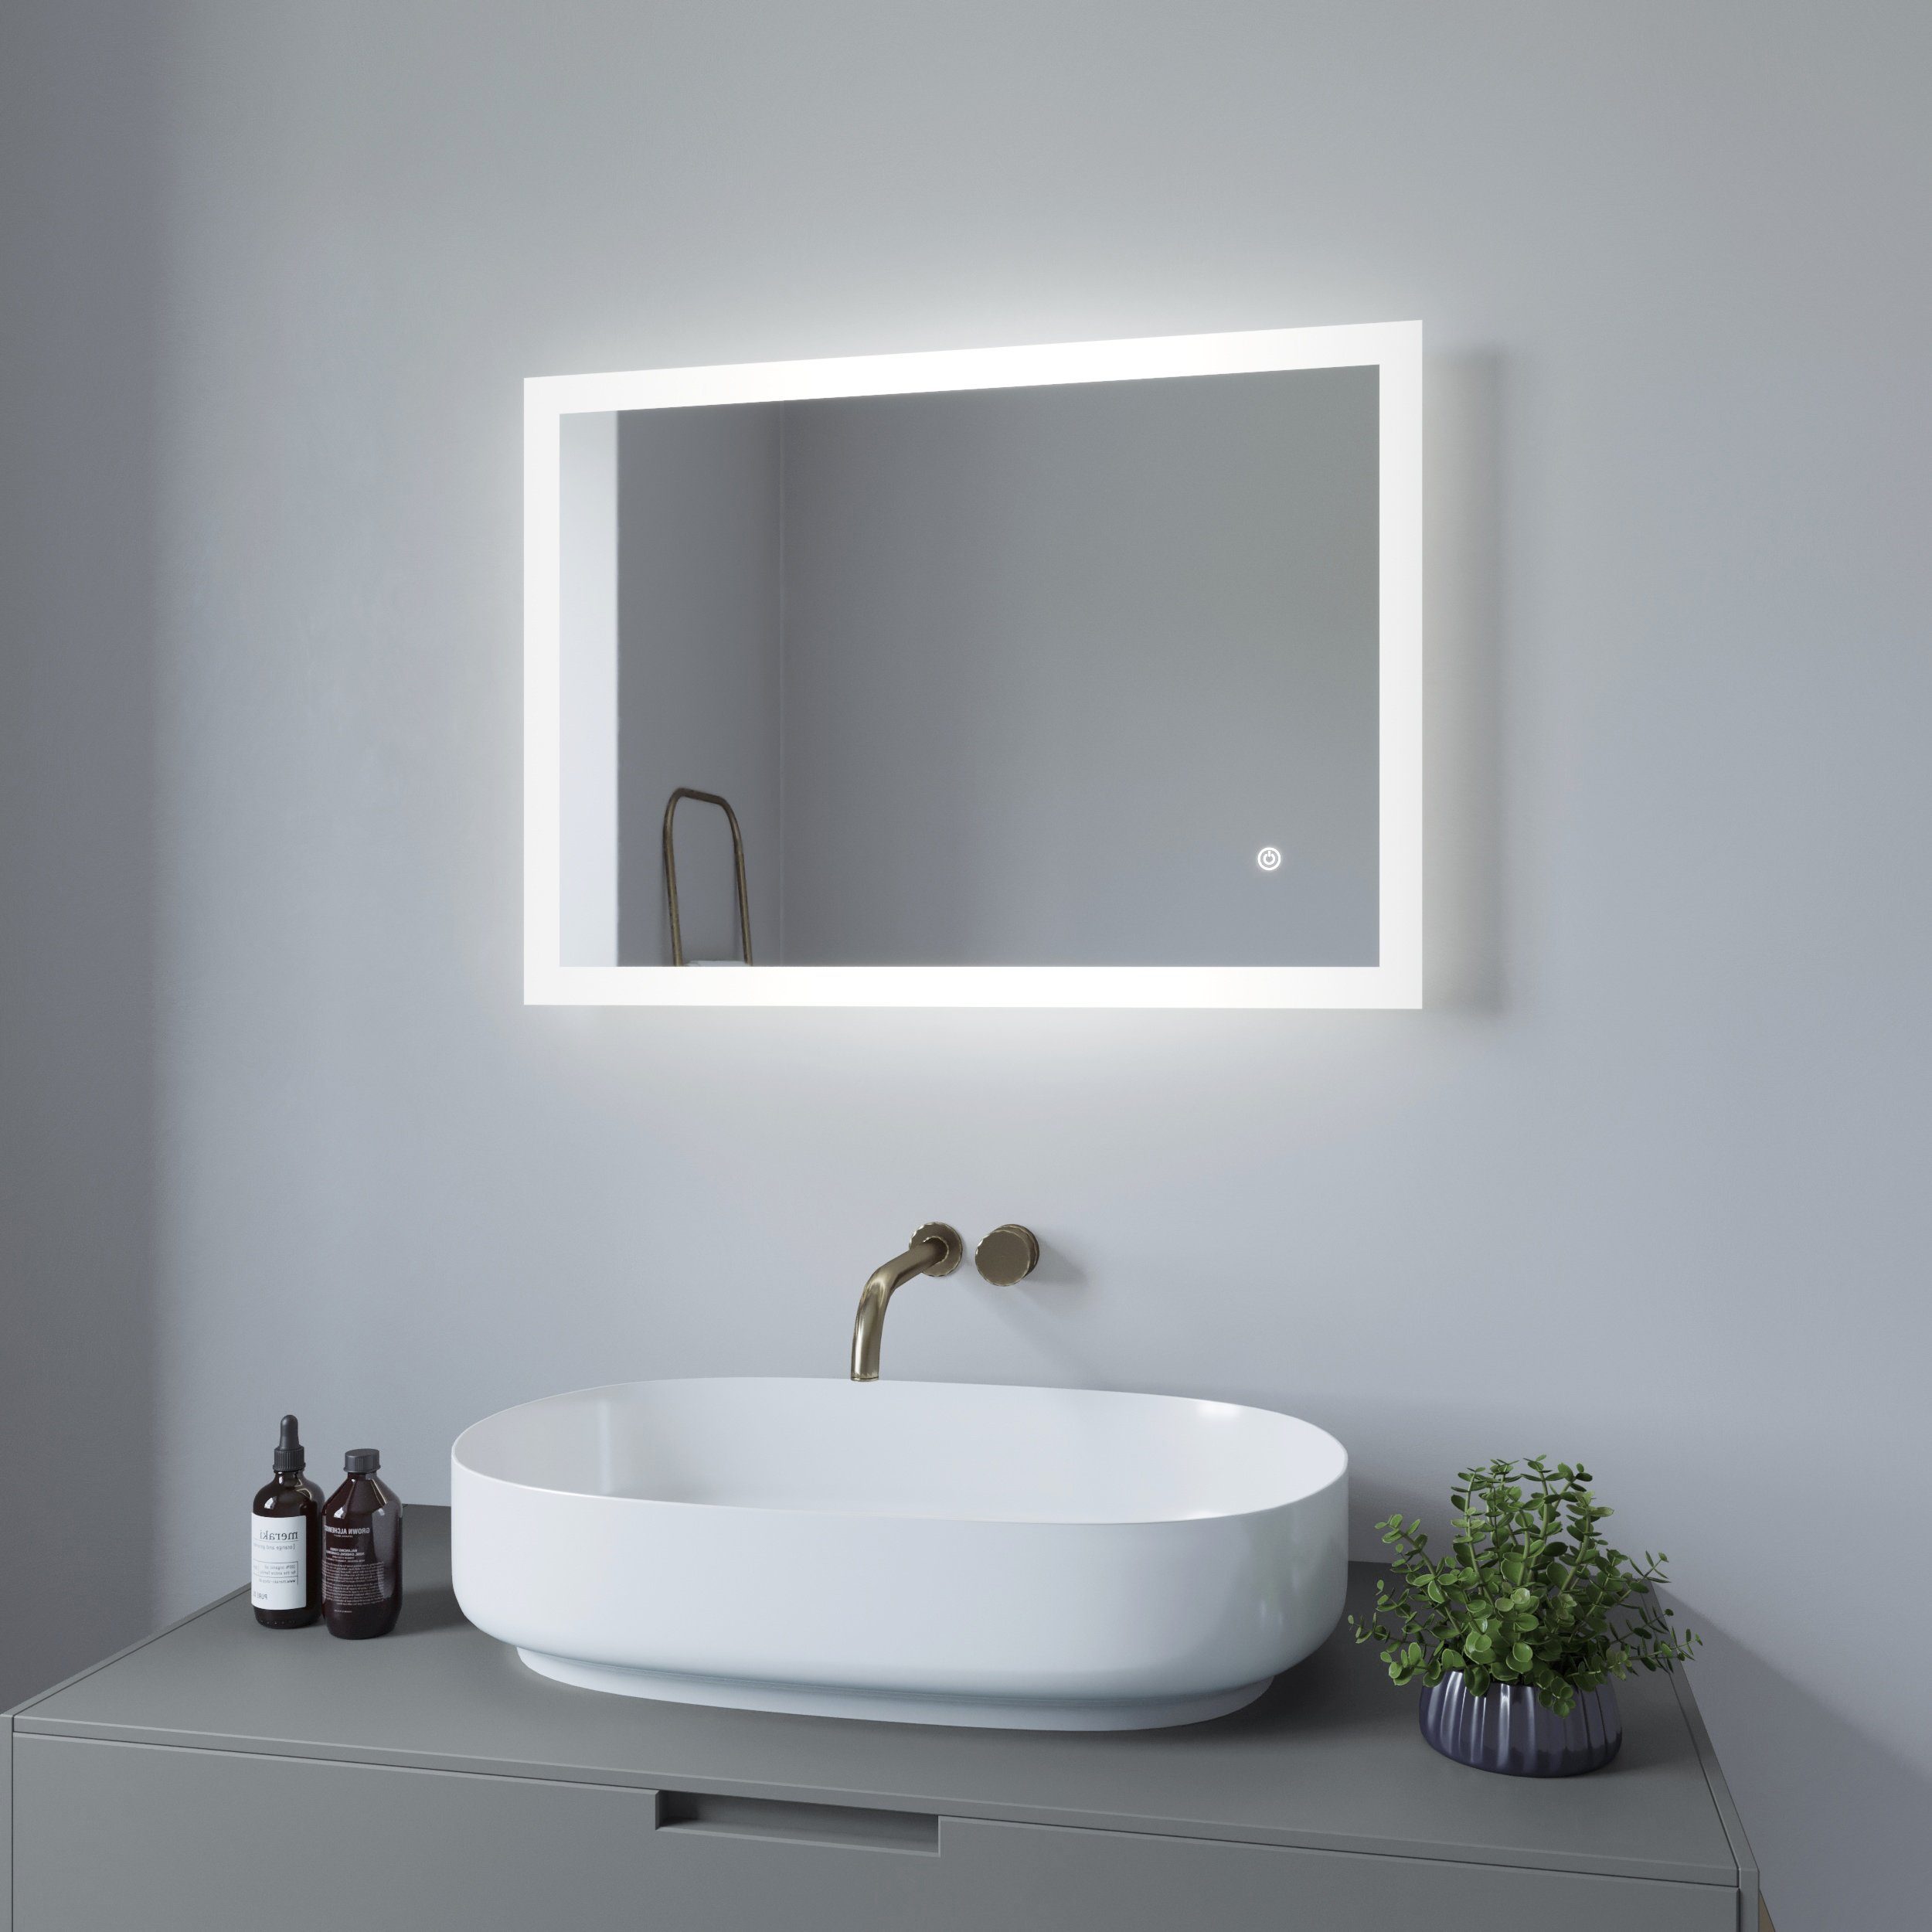 AQUALAVOS Badspiegel LED BadSpiegel mit Beleuchtung Ultradünn Dimmbar Badezimmerspiegel, Anti-Beschlag-Funktion, Touch-Schalter Dimmbar, Licht Memory-Funktion